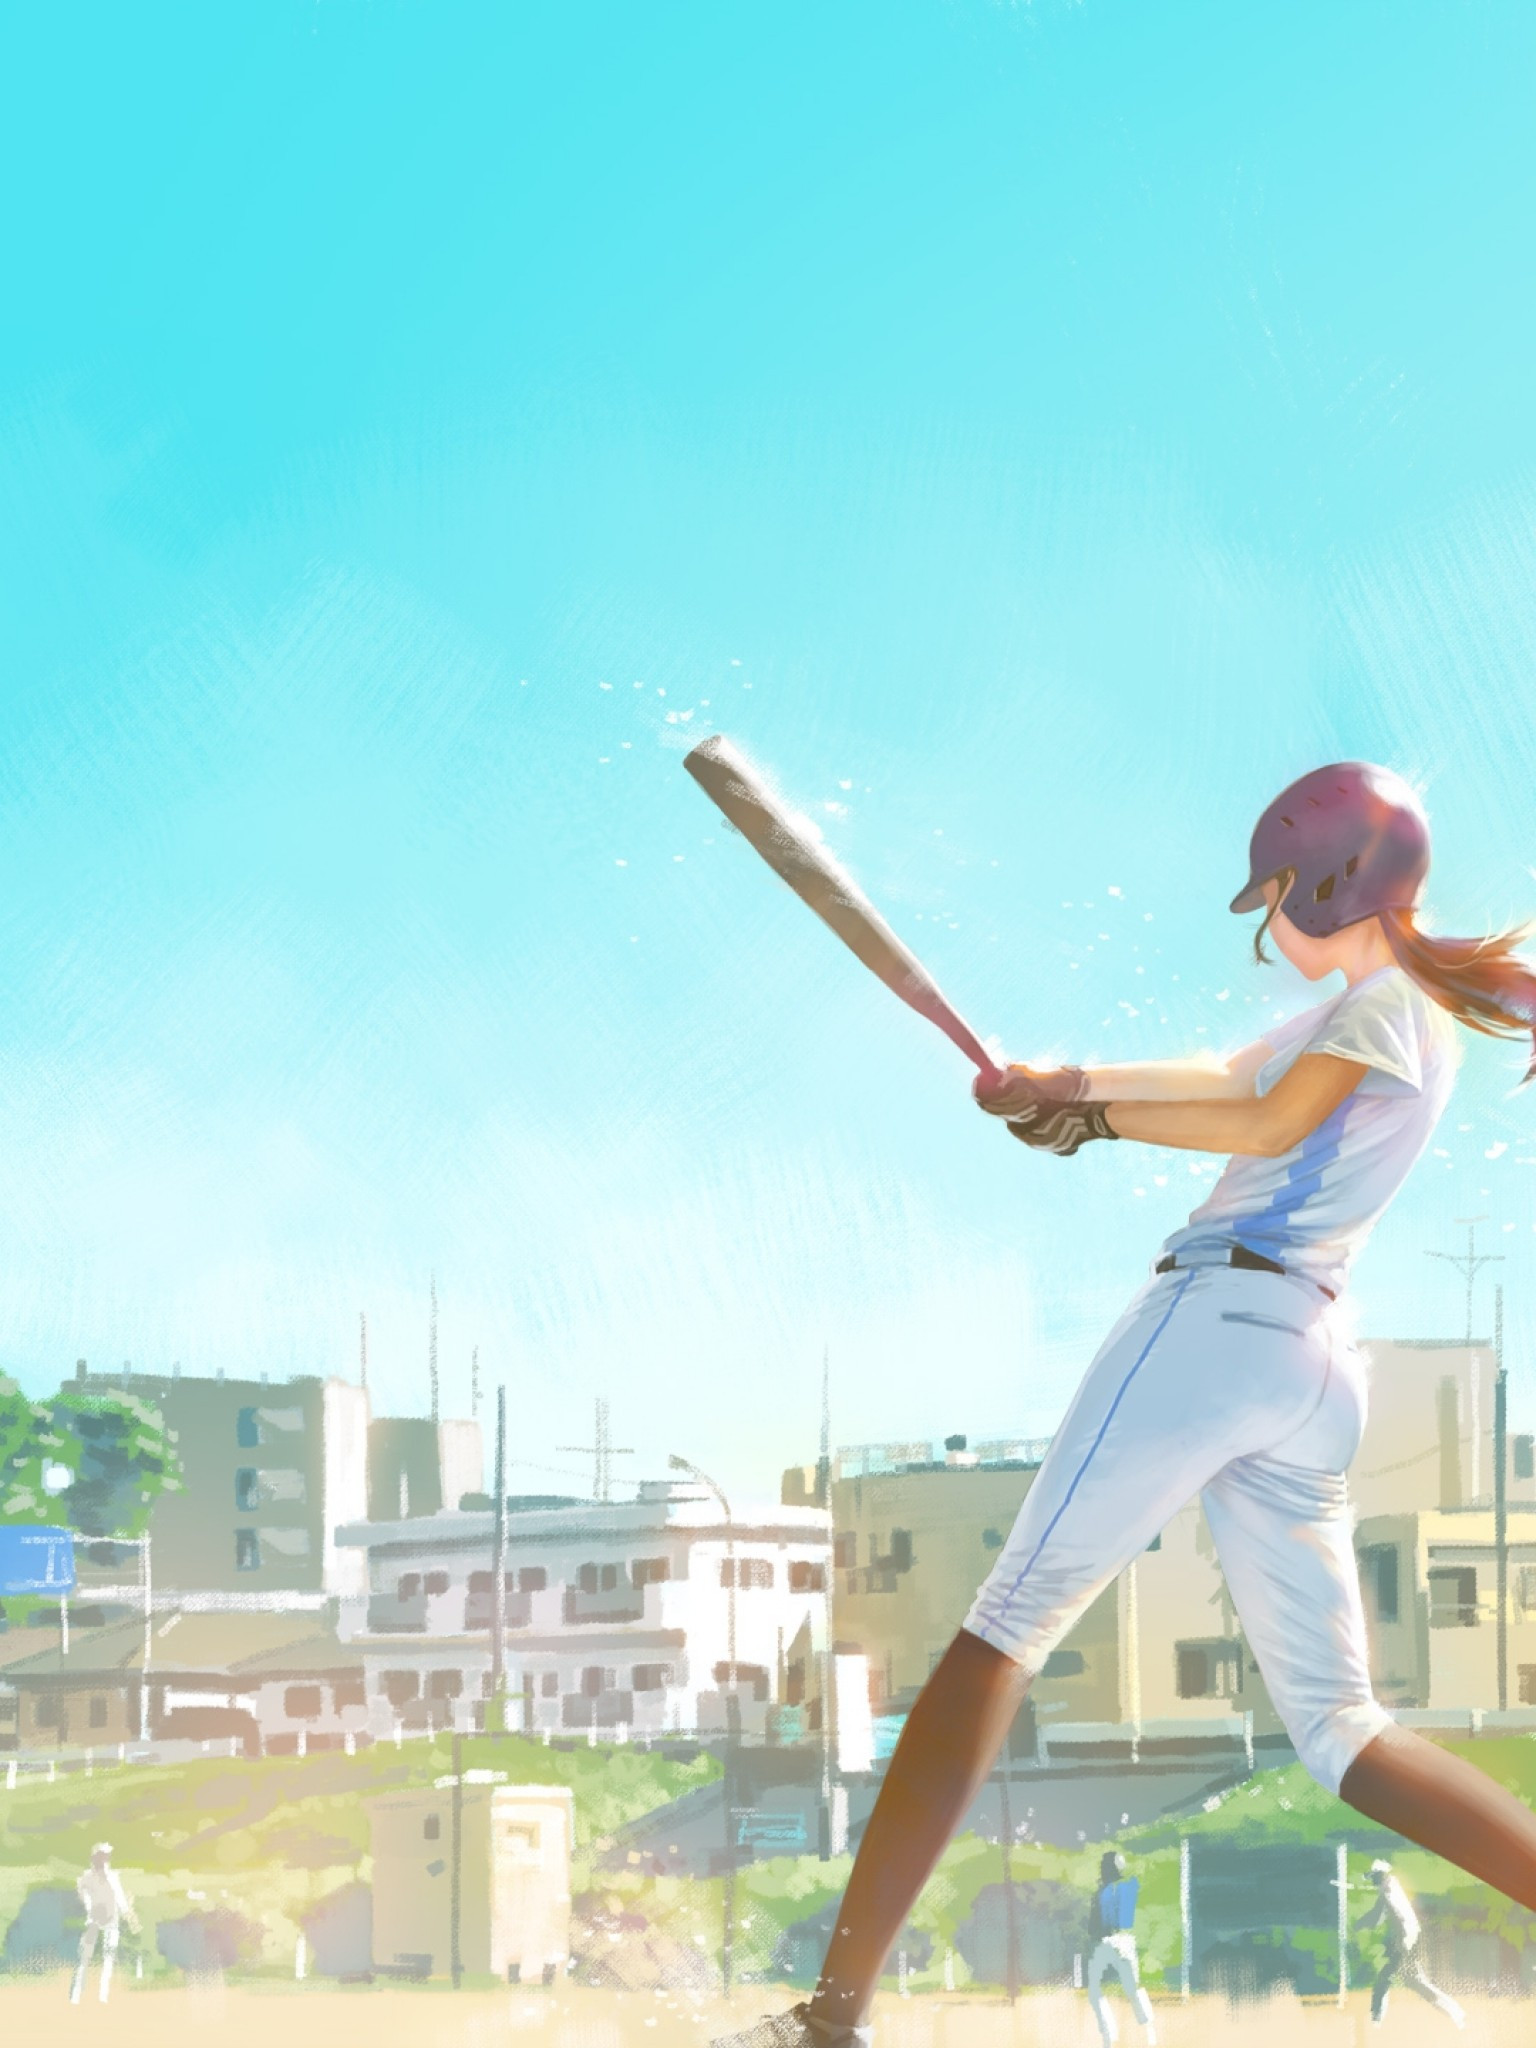 Download 1536x2048 Anime Girl, Baseball Player, Field, Baseball Bat Wallpaper for Apple iPad Mini, Apple IPad 4